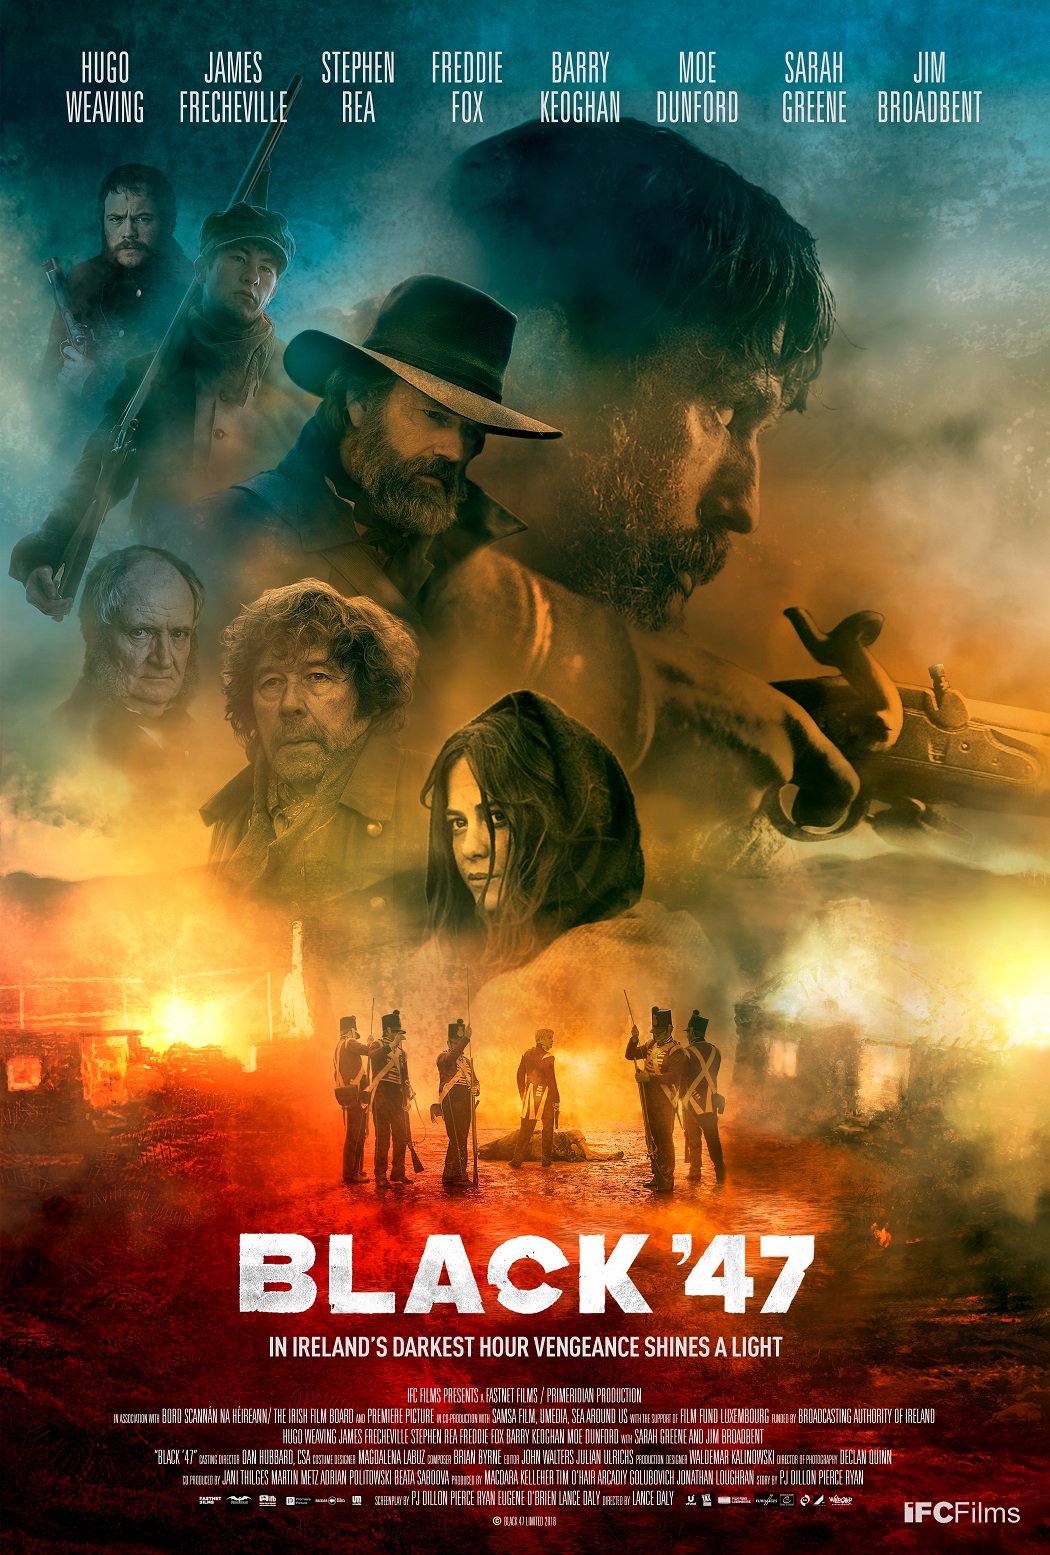 Black 47 Movie Screening: 15 May 2019